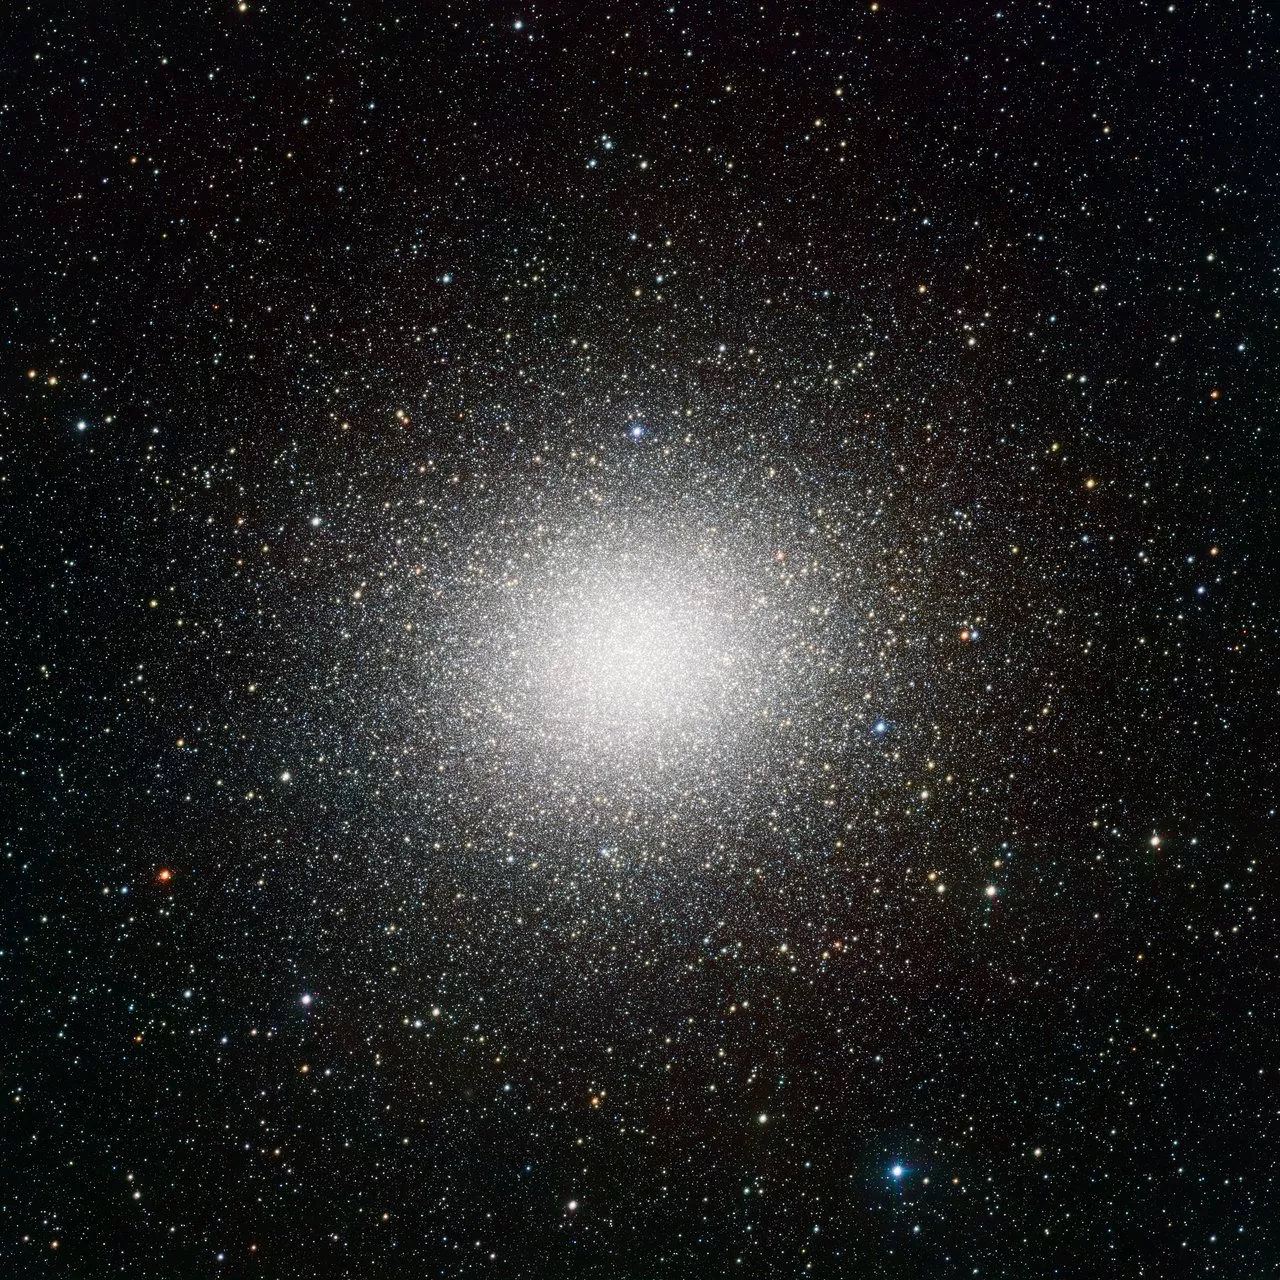 Globular cluster. Photo taken through a telescope.